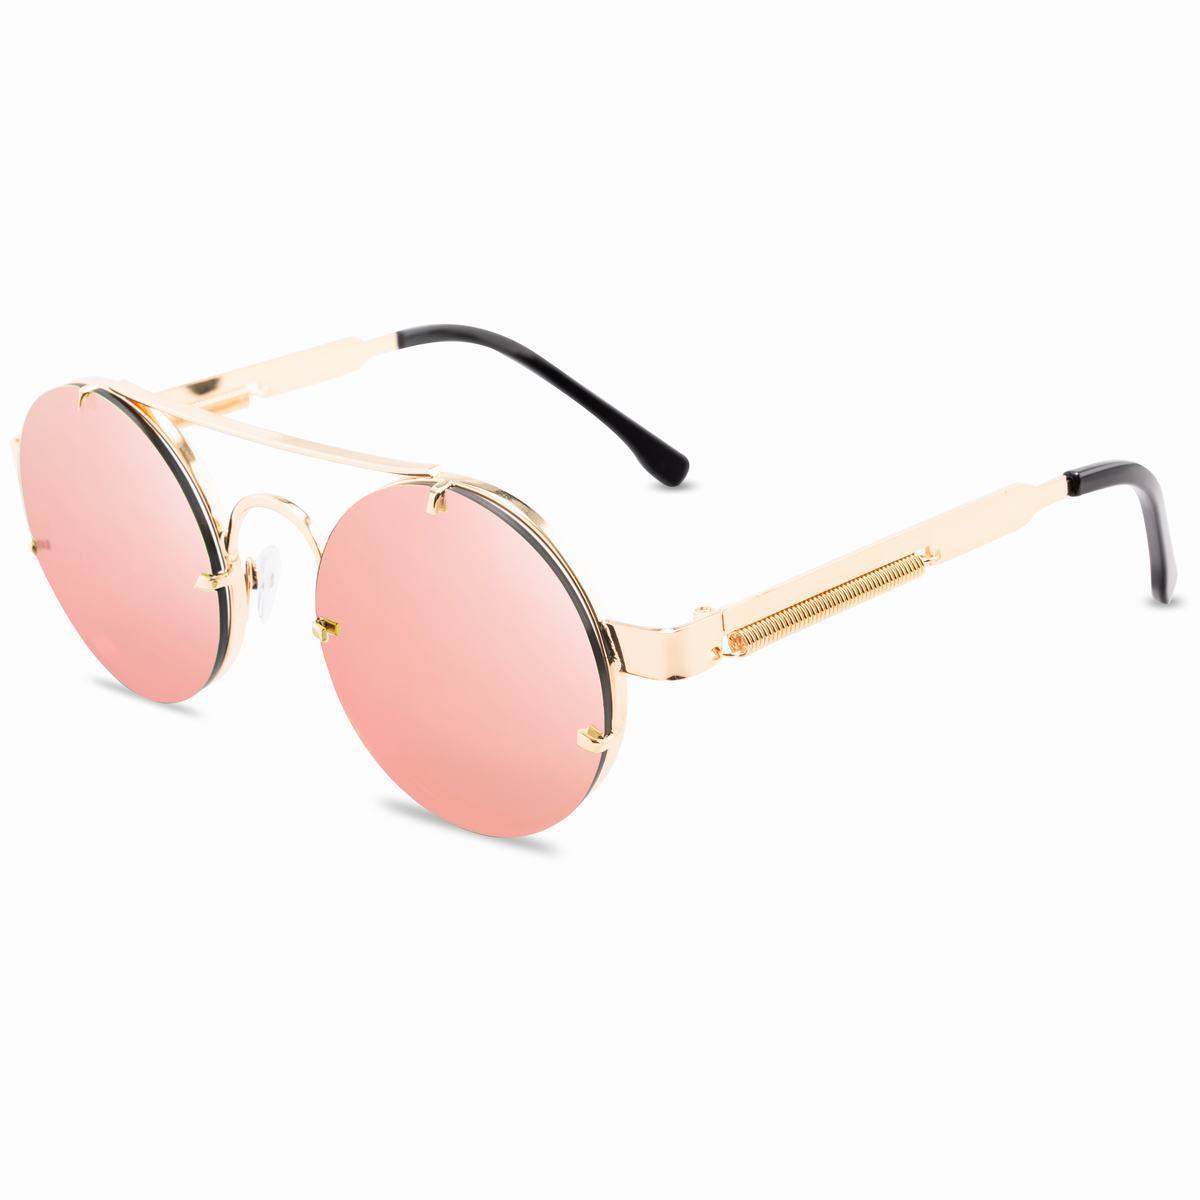 893 European and American Punk Vintage round Frame Sunglasses Exquisite Fashion Women's Sunglasses Spring Temple Design Glasses 815